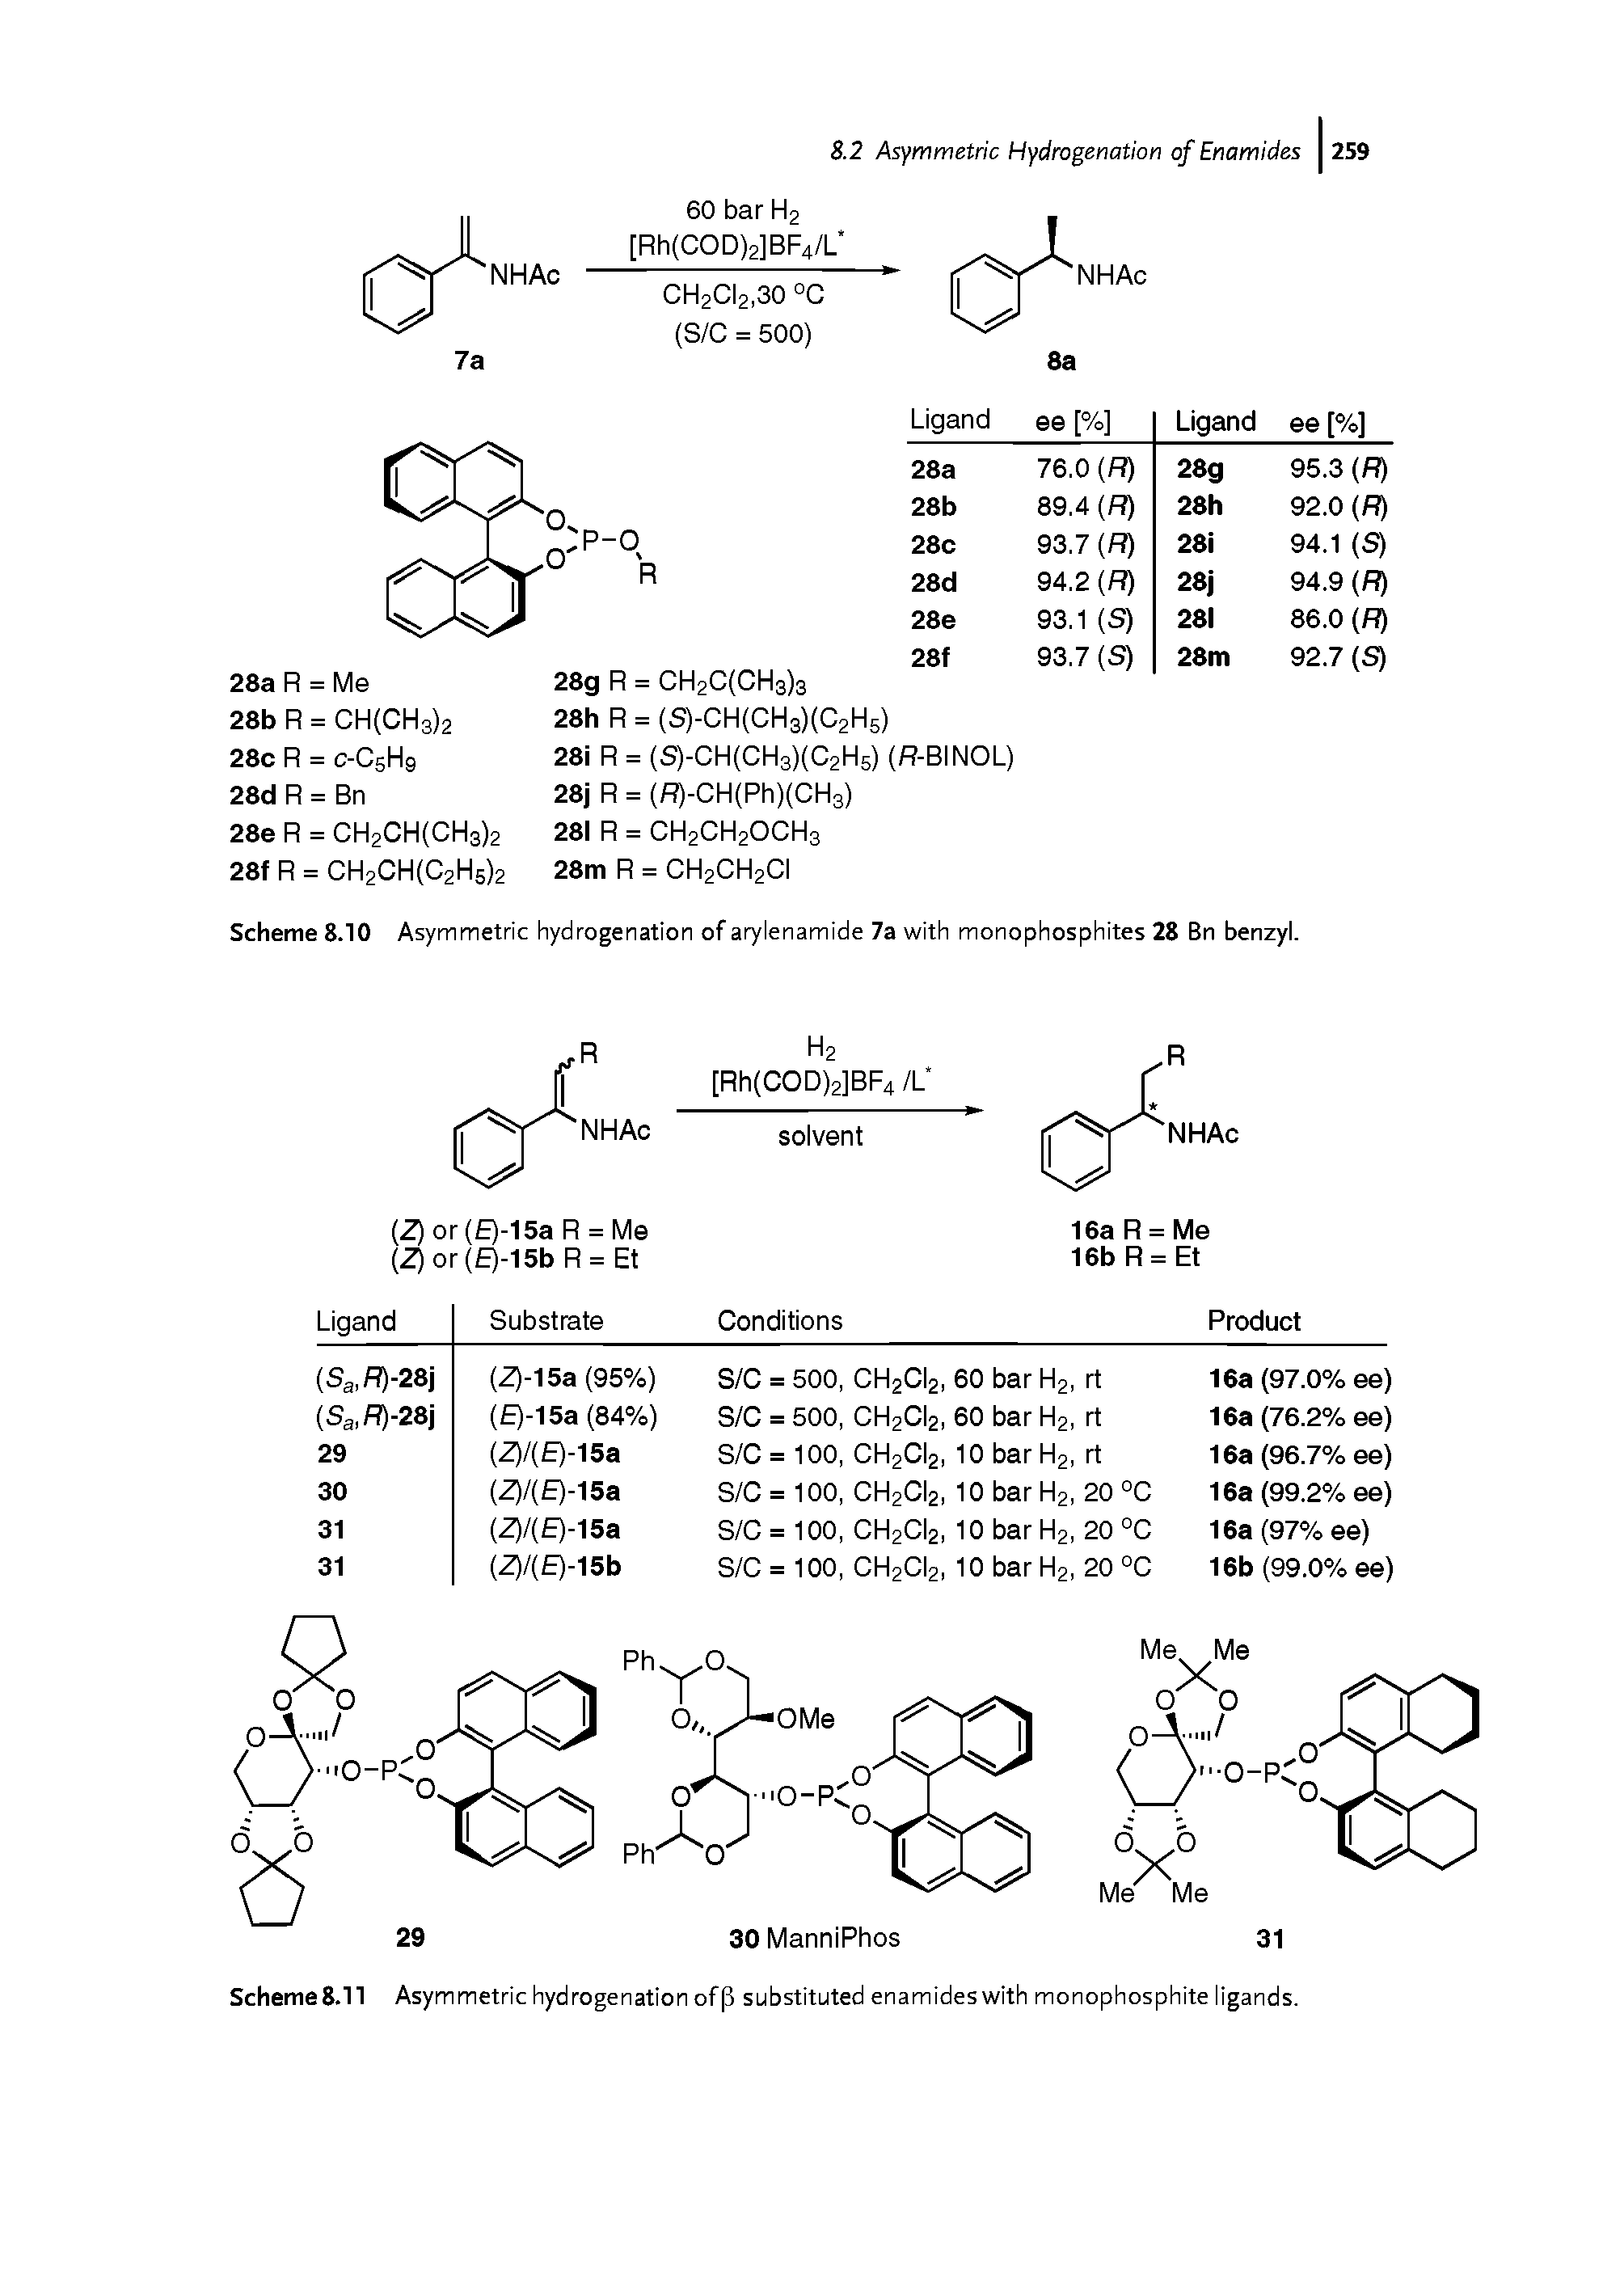 Scheme8.n Asymmetric hydrogenation ofp substituted enamides with monophosphite ligands.